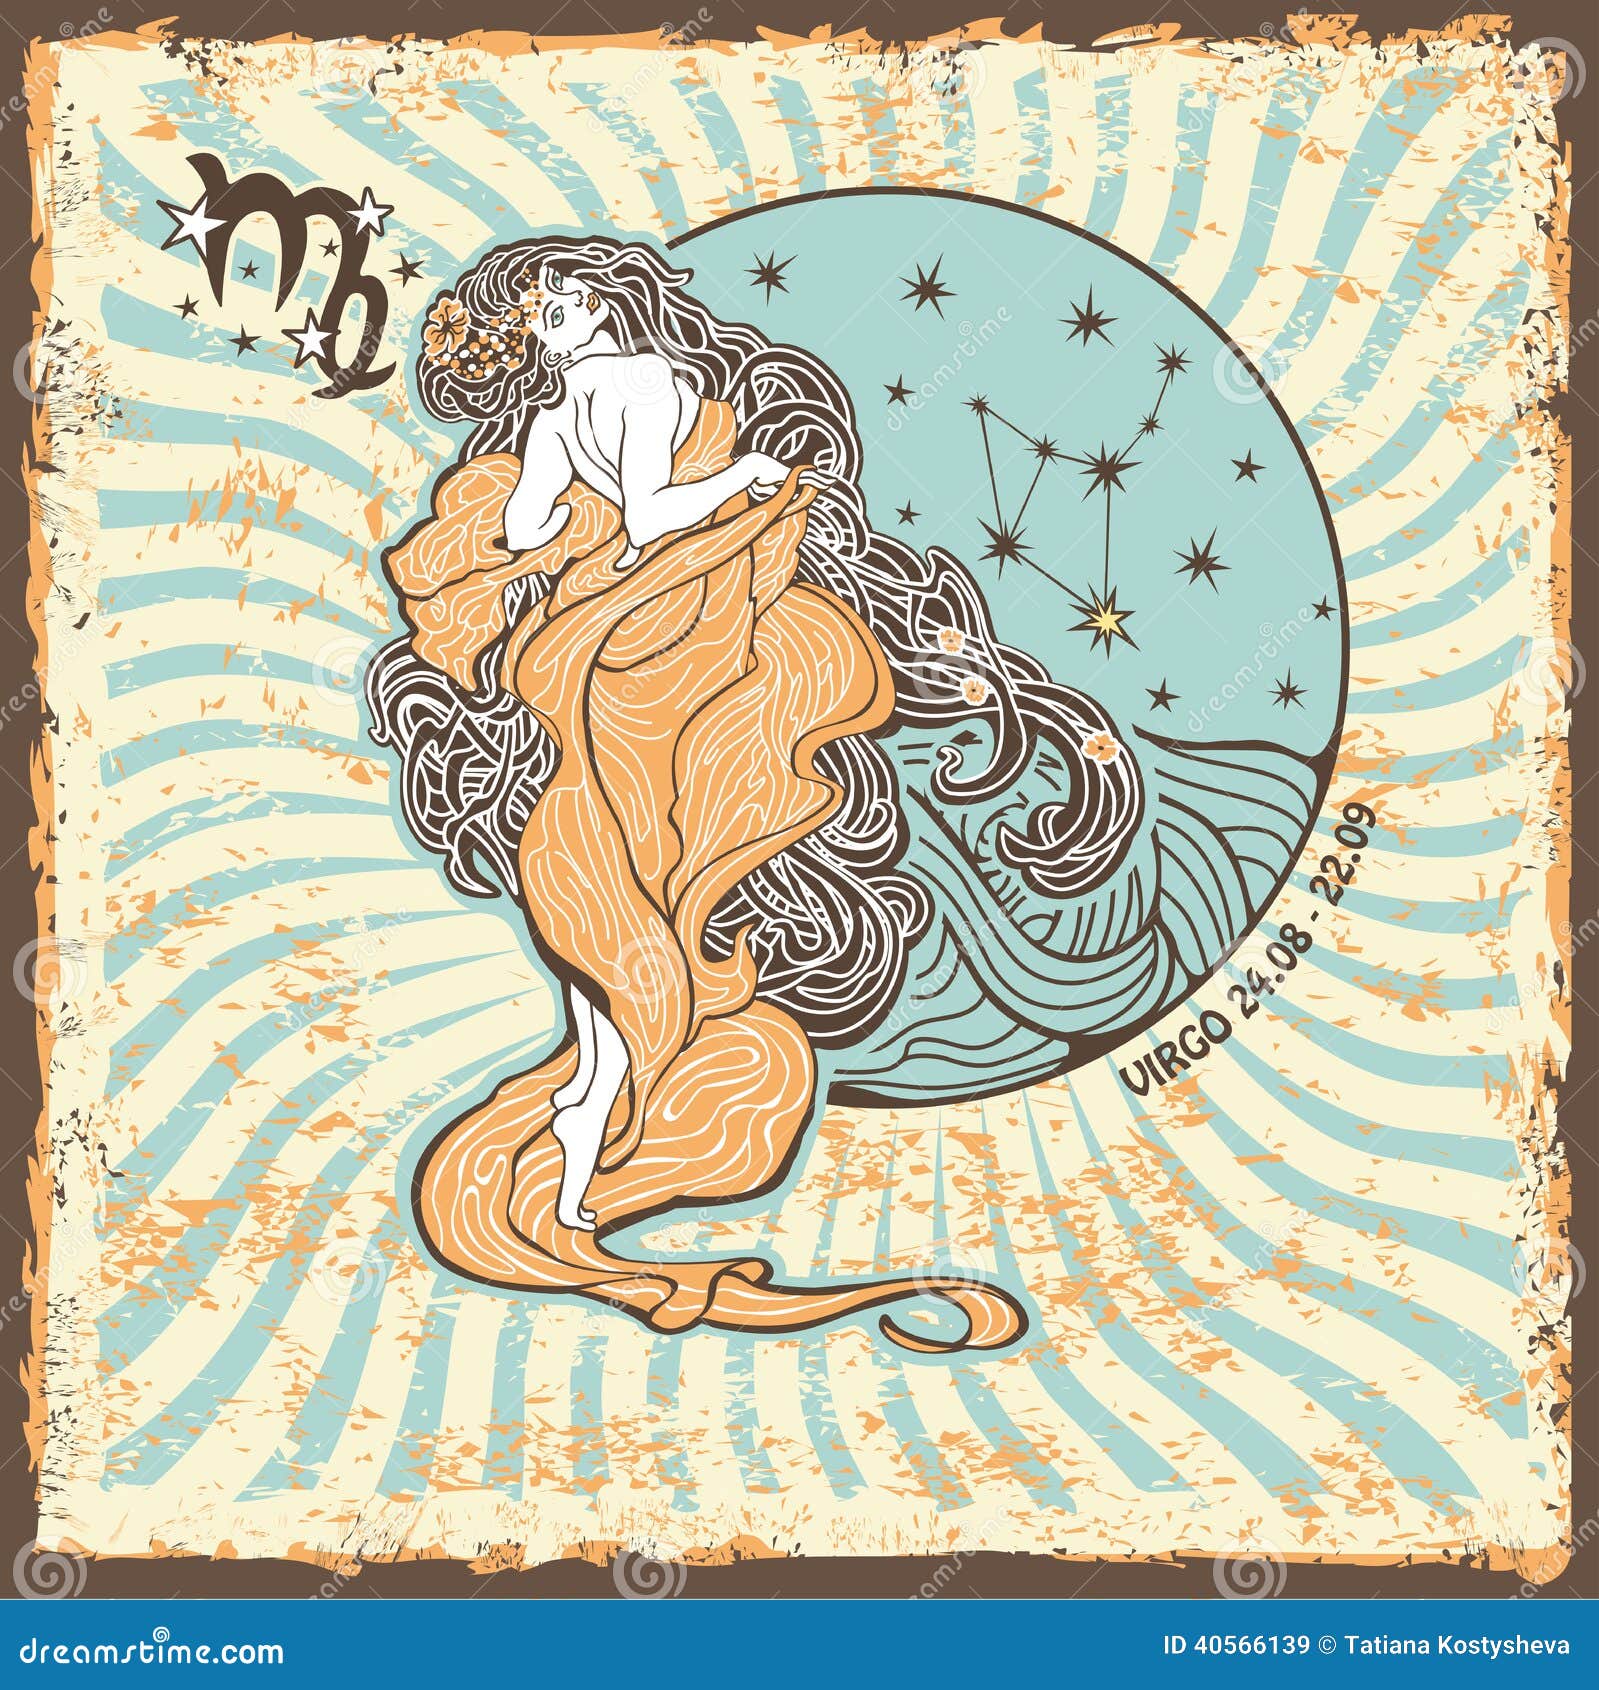 virgo zodiac sign.vintage horoscope card